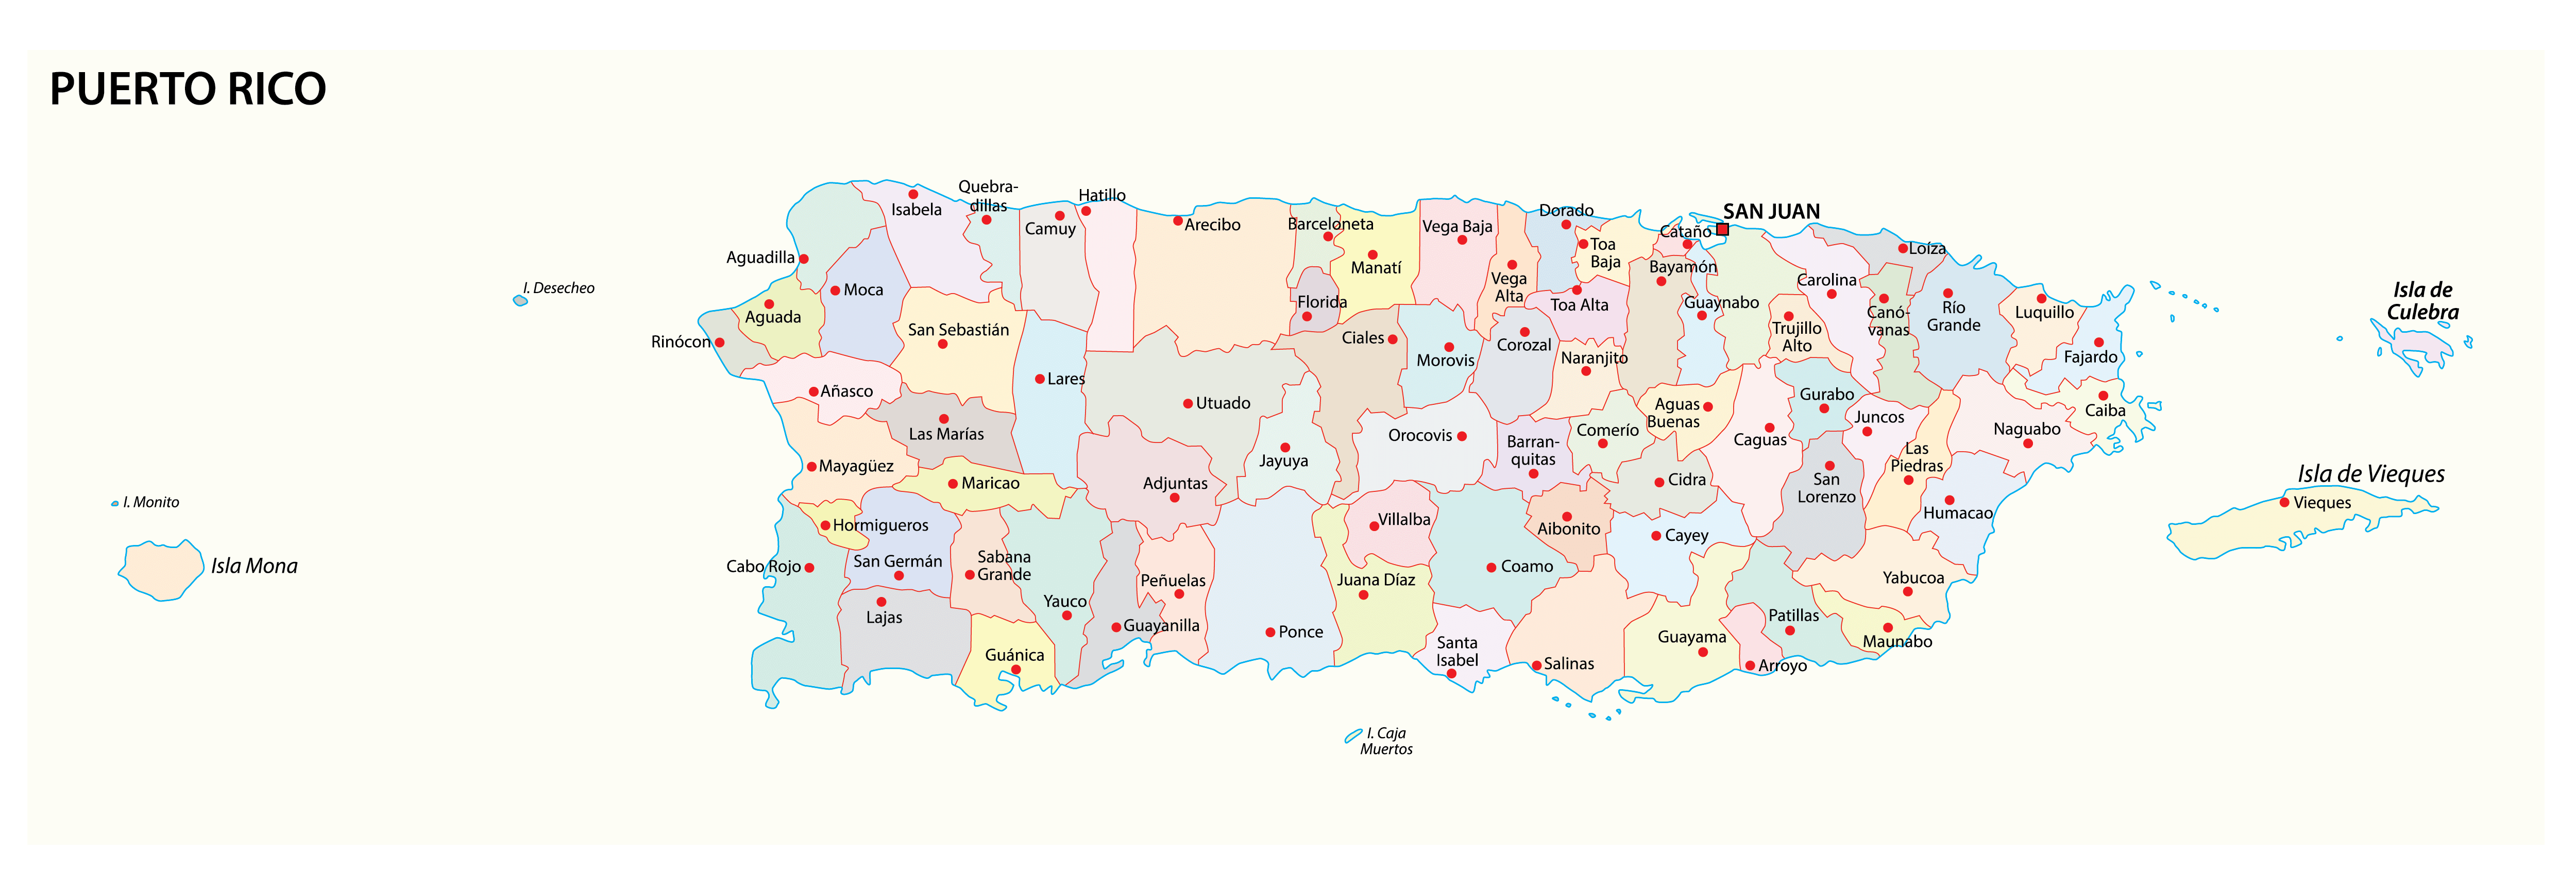 Municipalities of Puerto Rico Map